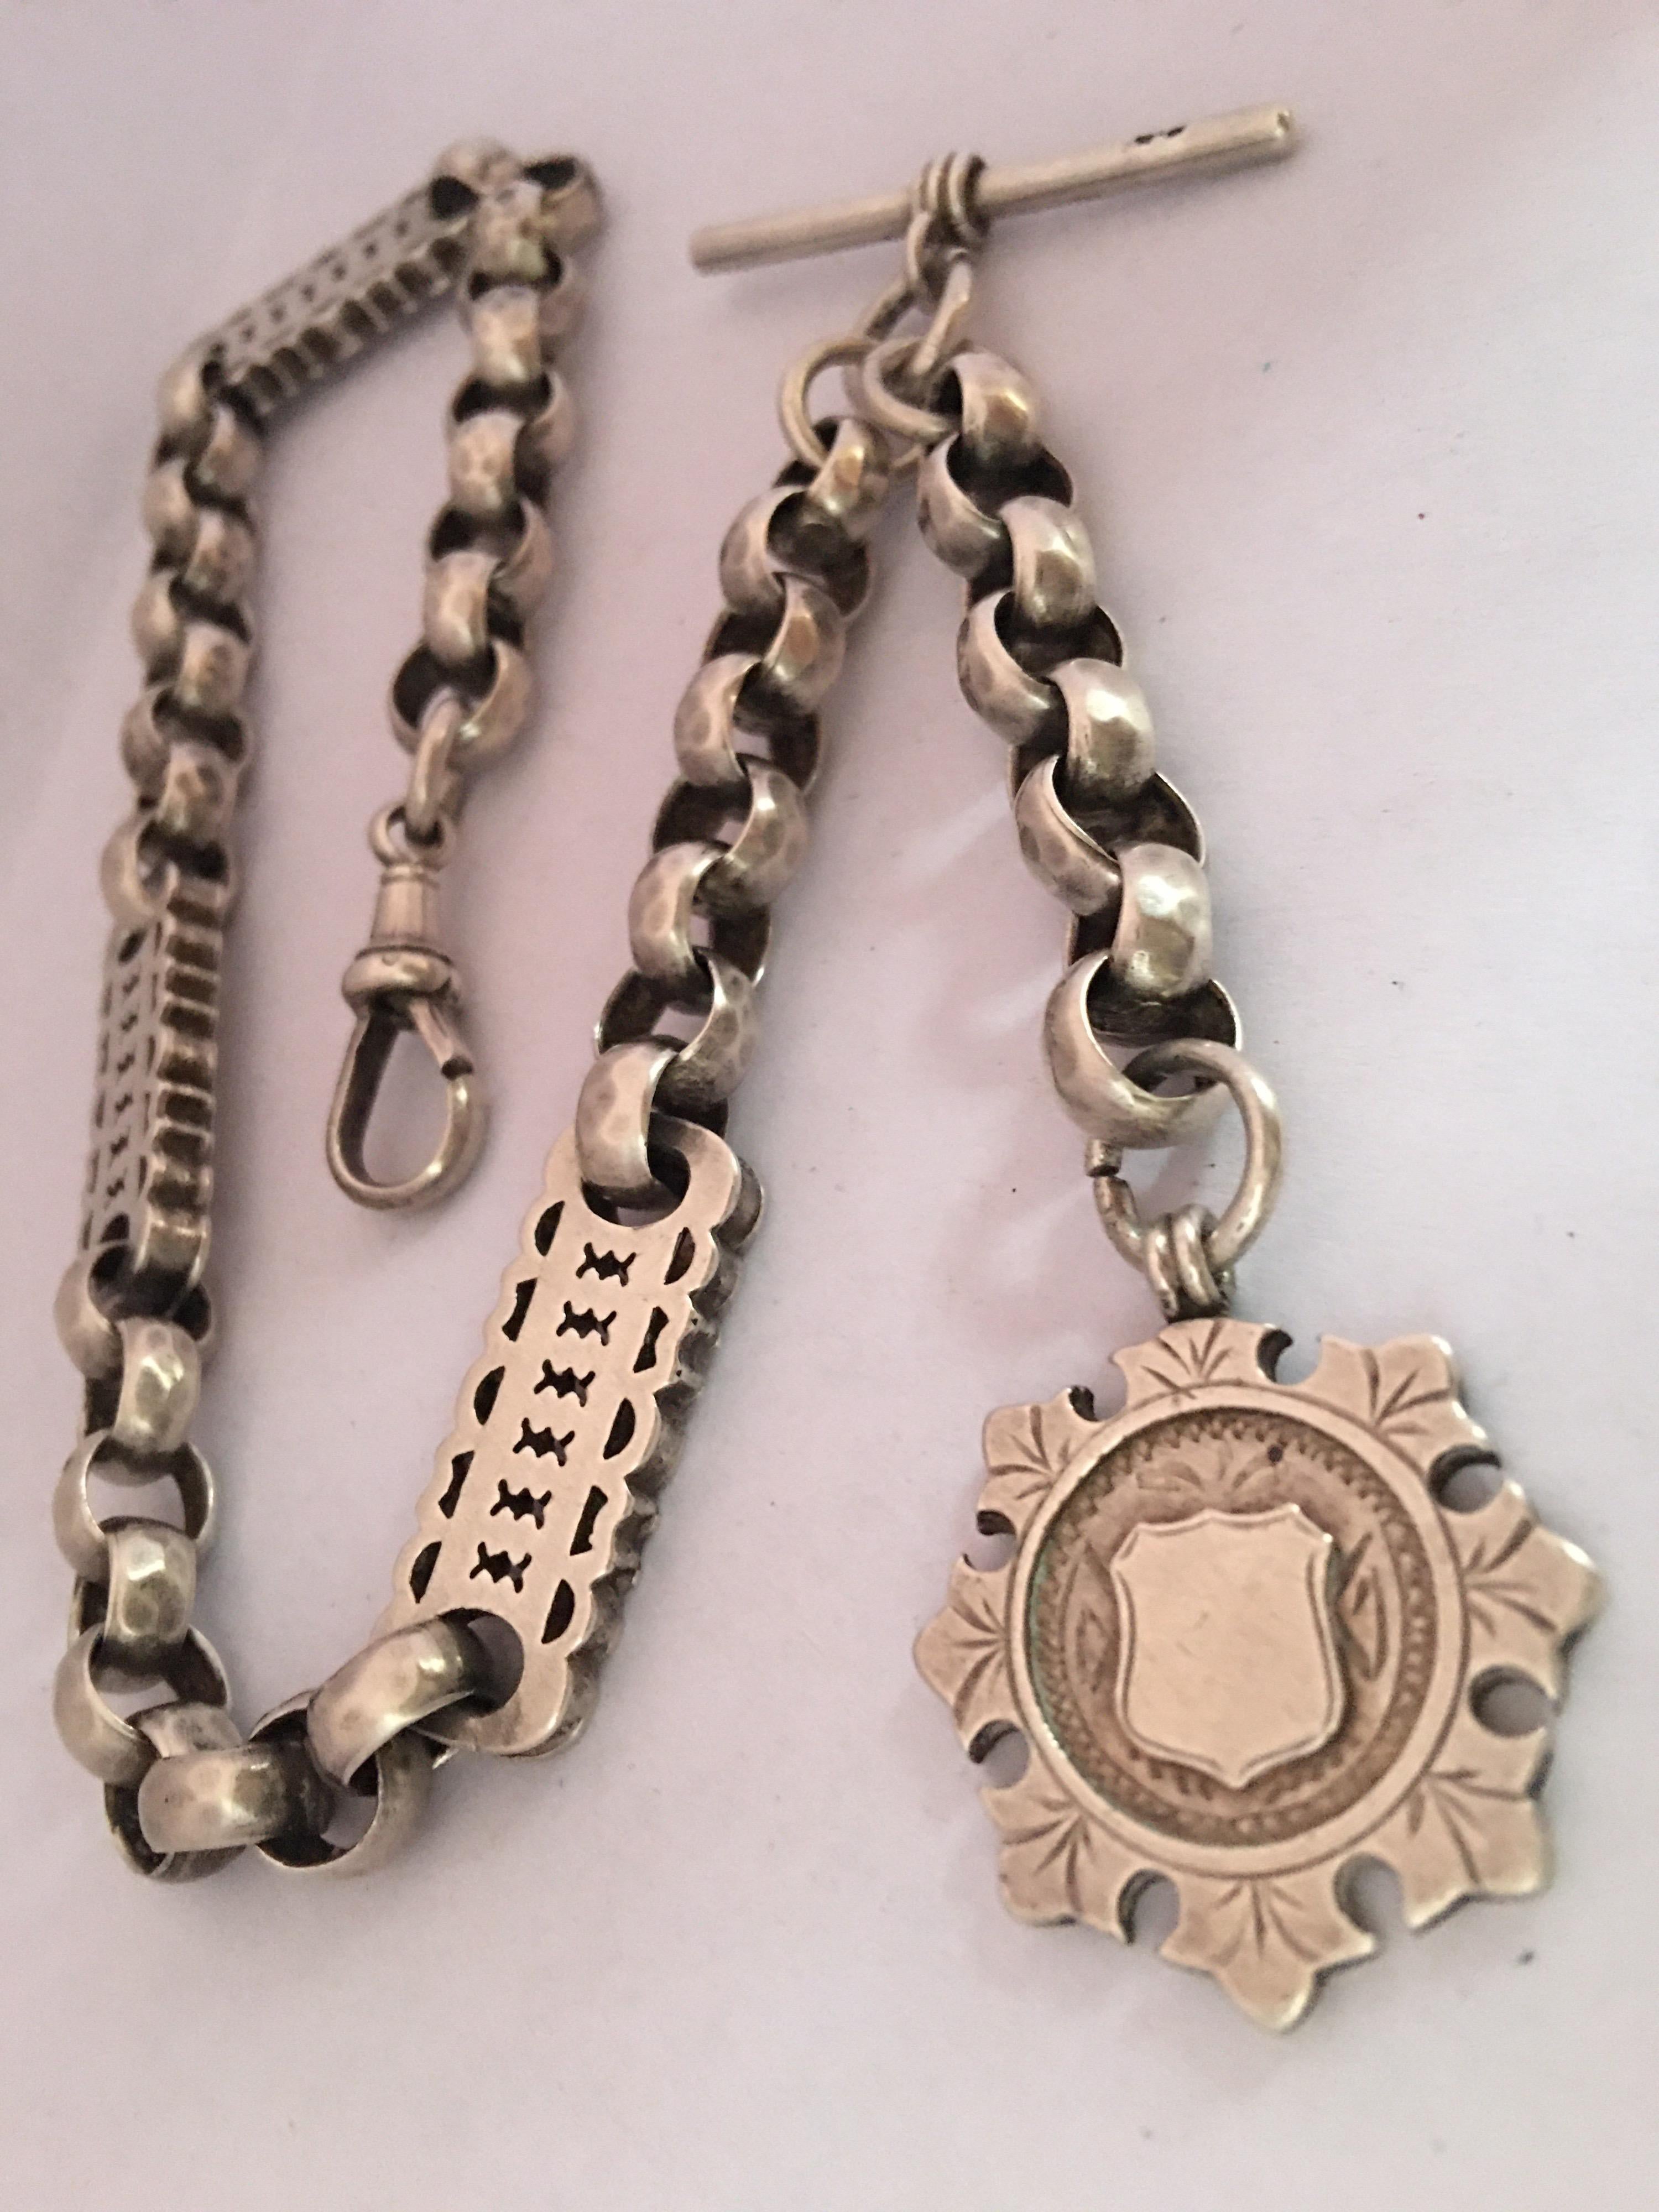 Antique Silver Pocket Watch Chain 3